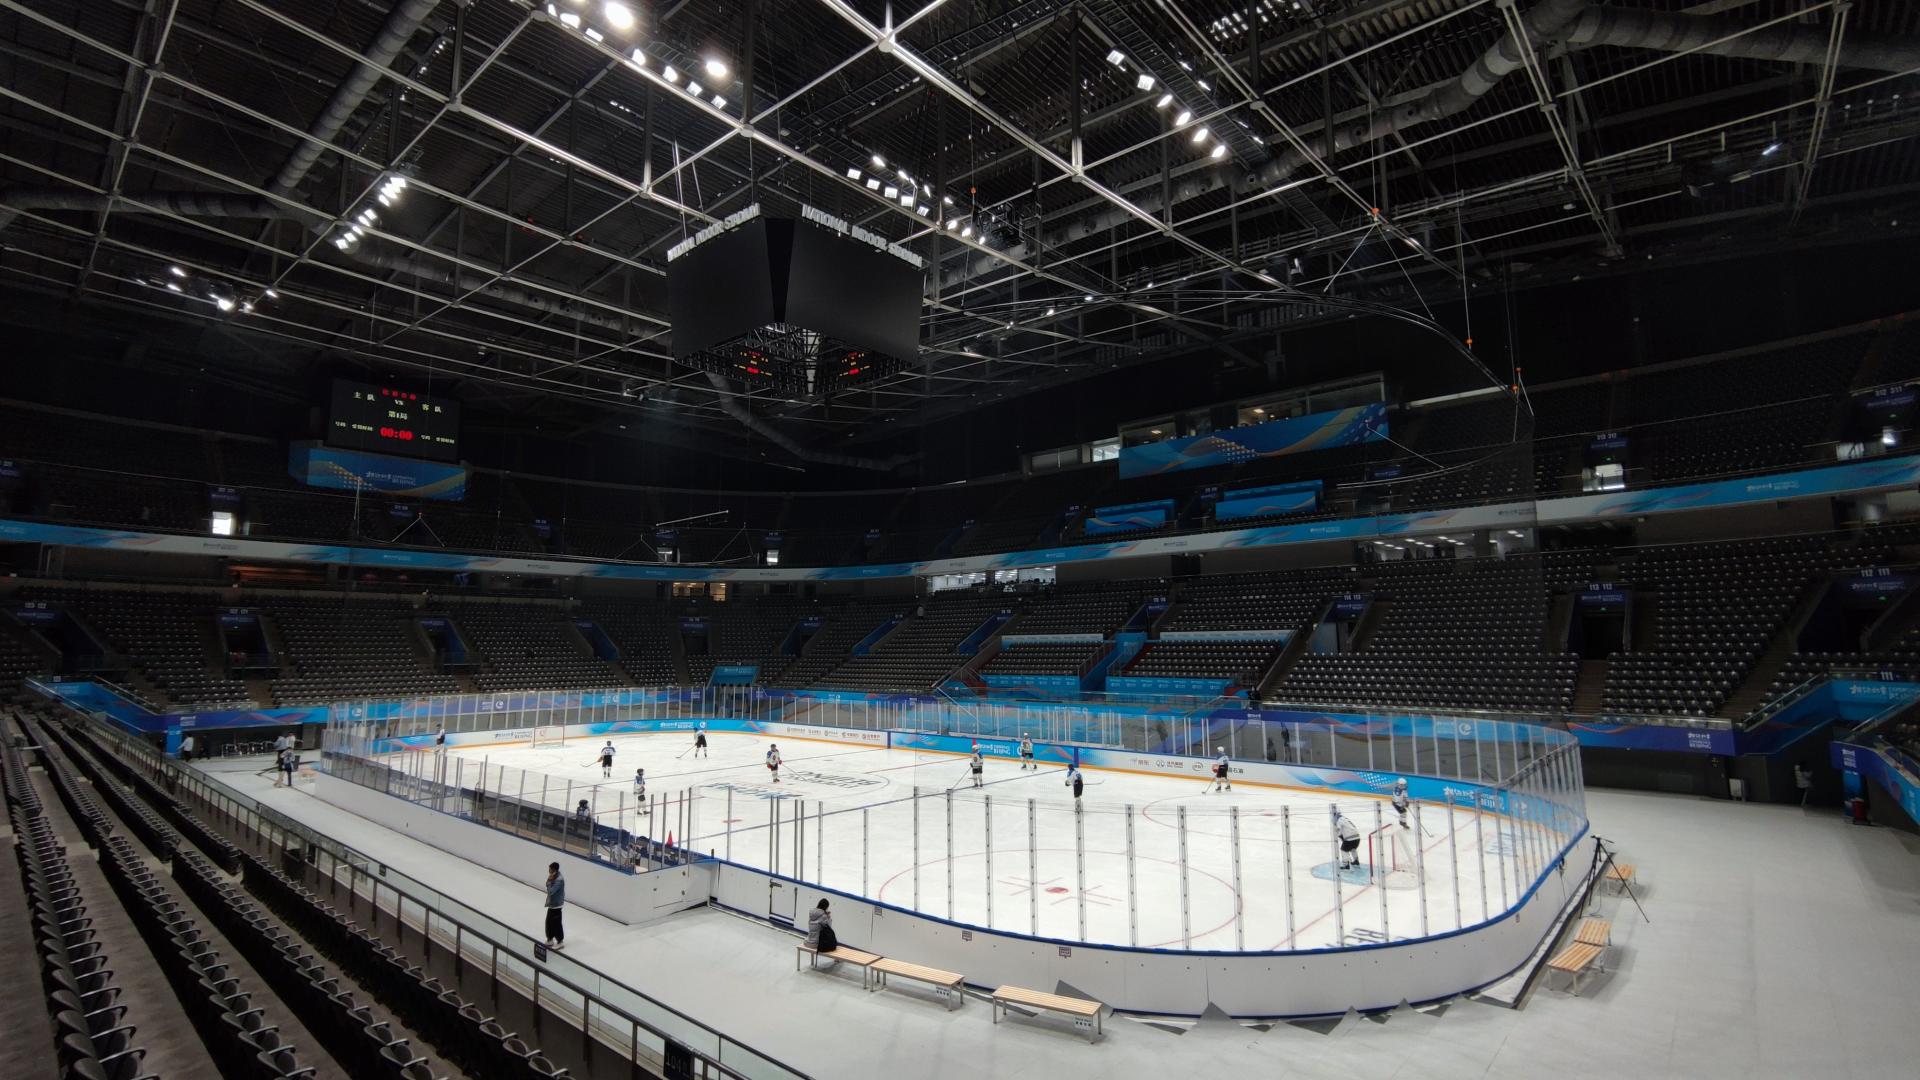 Olympic ice hockey tests underway at Beijing's National Indoor Stadium - CGTN